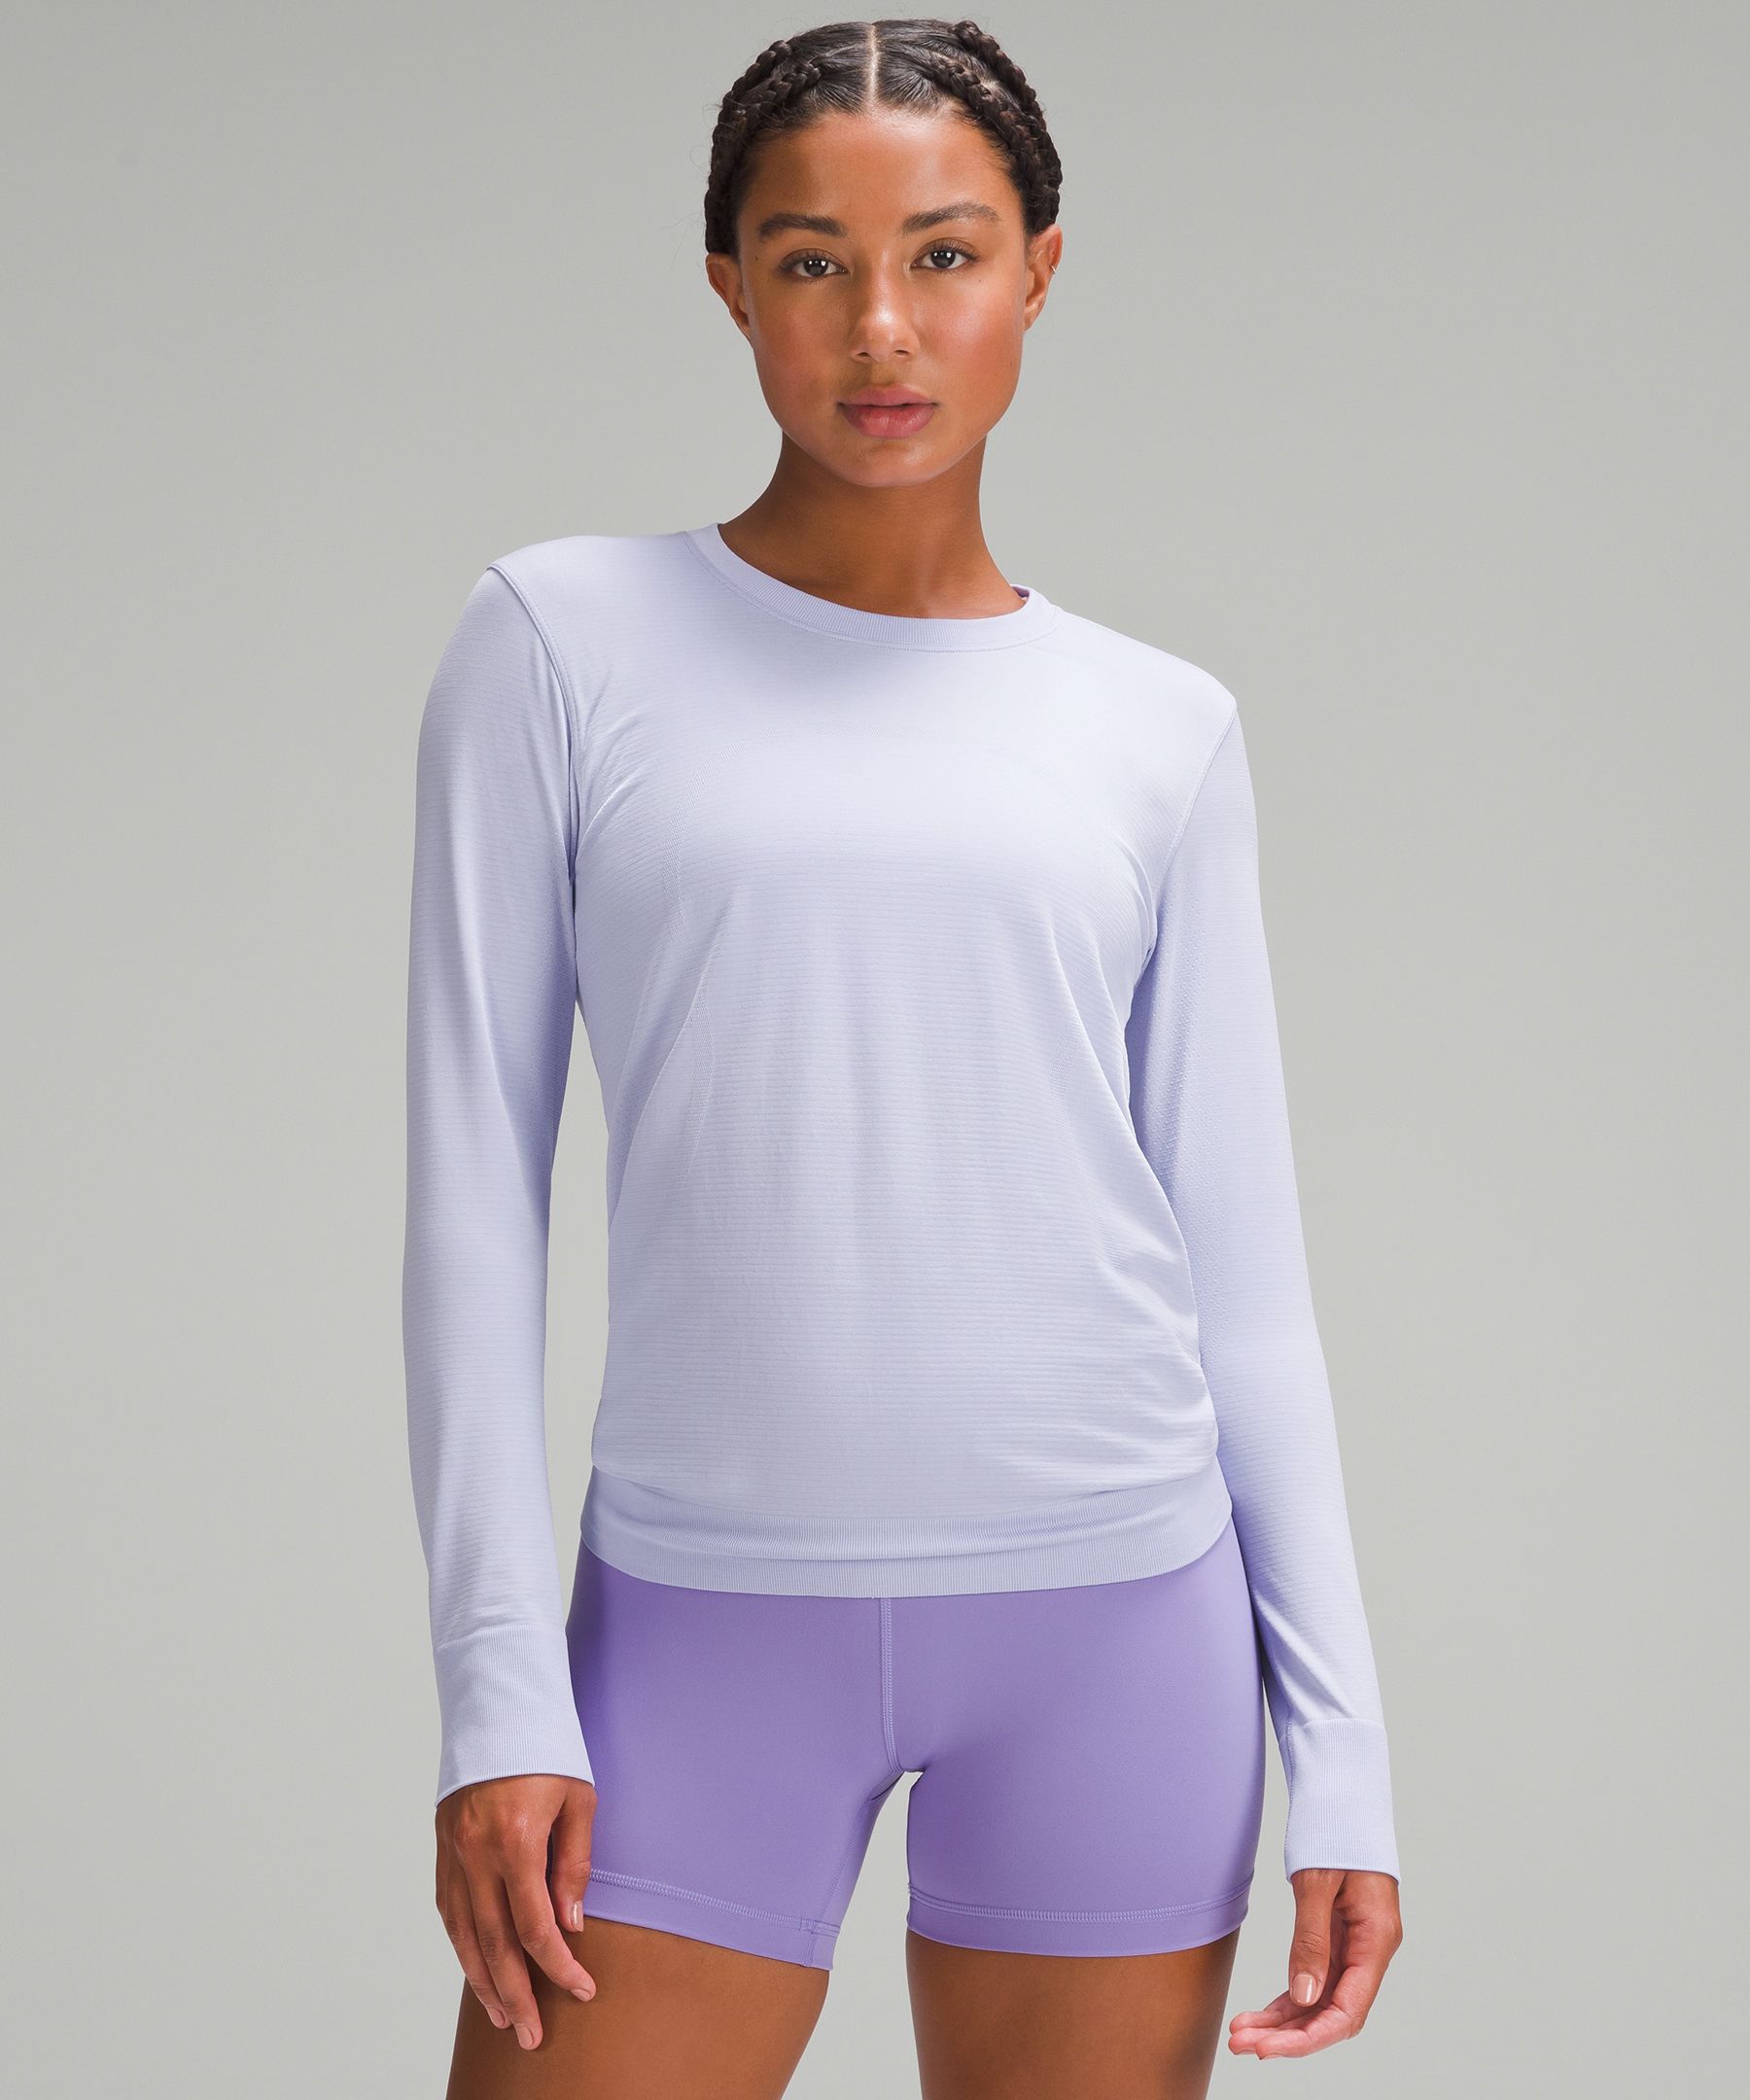 Swiftly Relaxed Long Sleeve Shirt 2.0 | Women's Long Sleeve Shirts ...